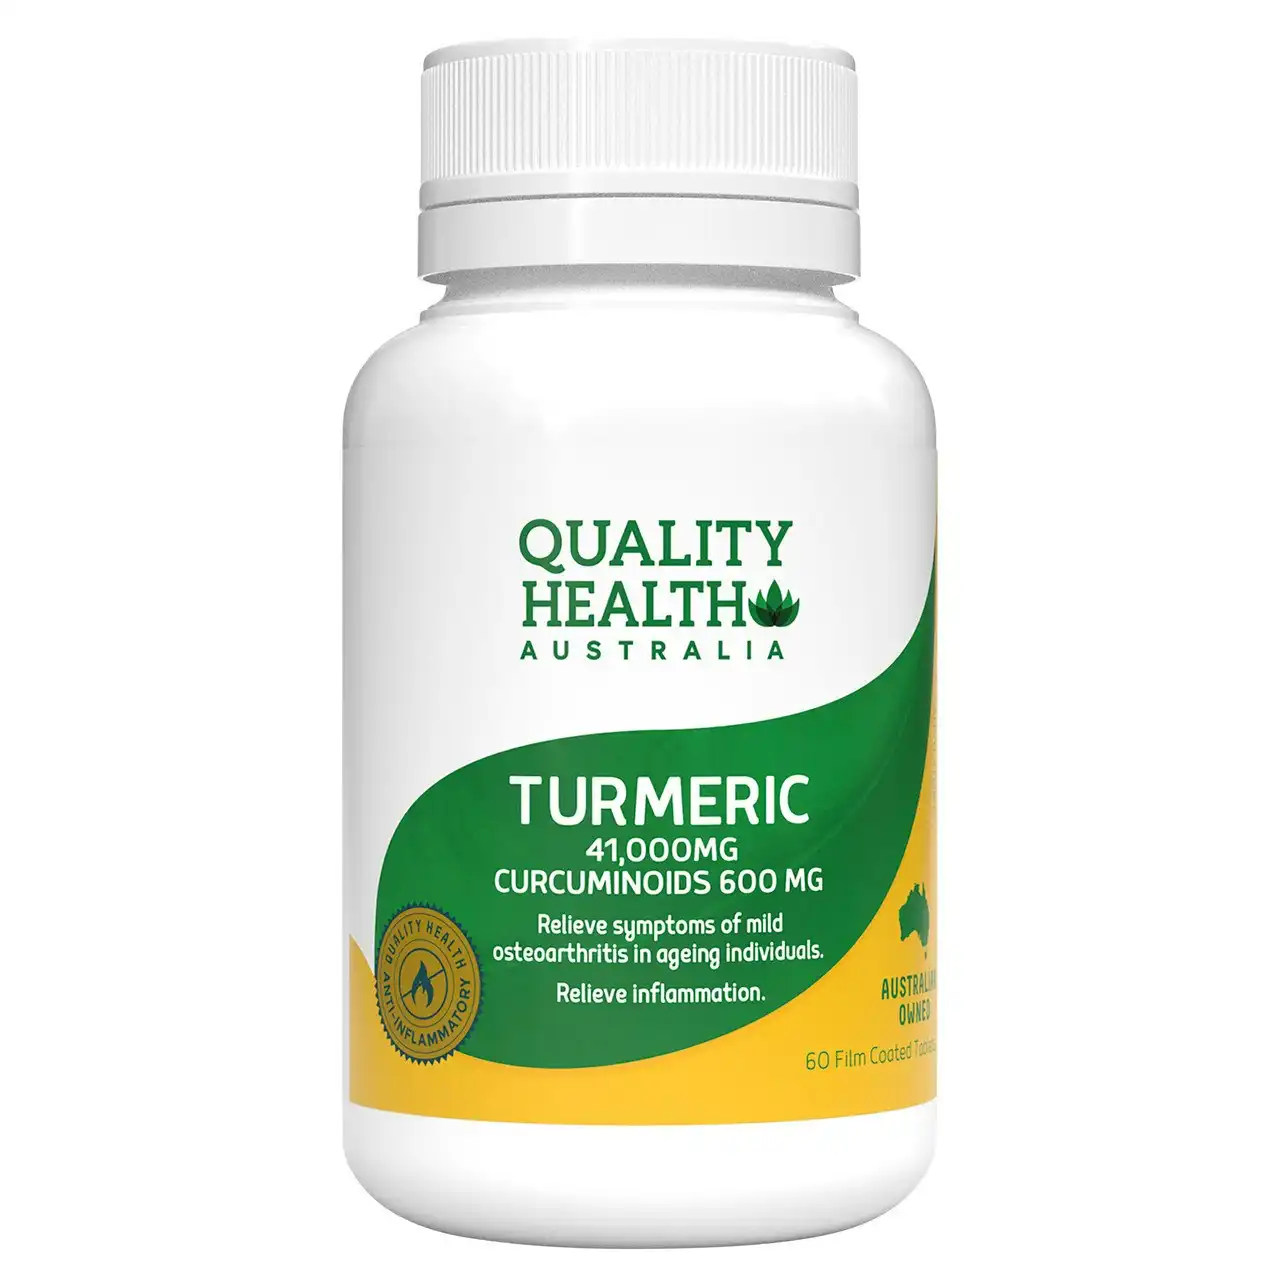 Quality Health Australia Turmeric 41,000mg Curcuminoids 600mg 60s